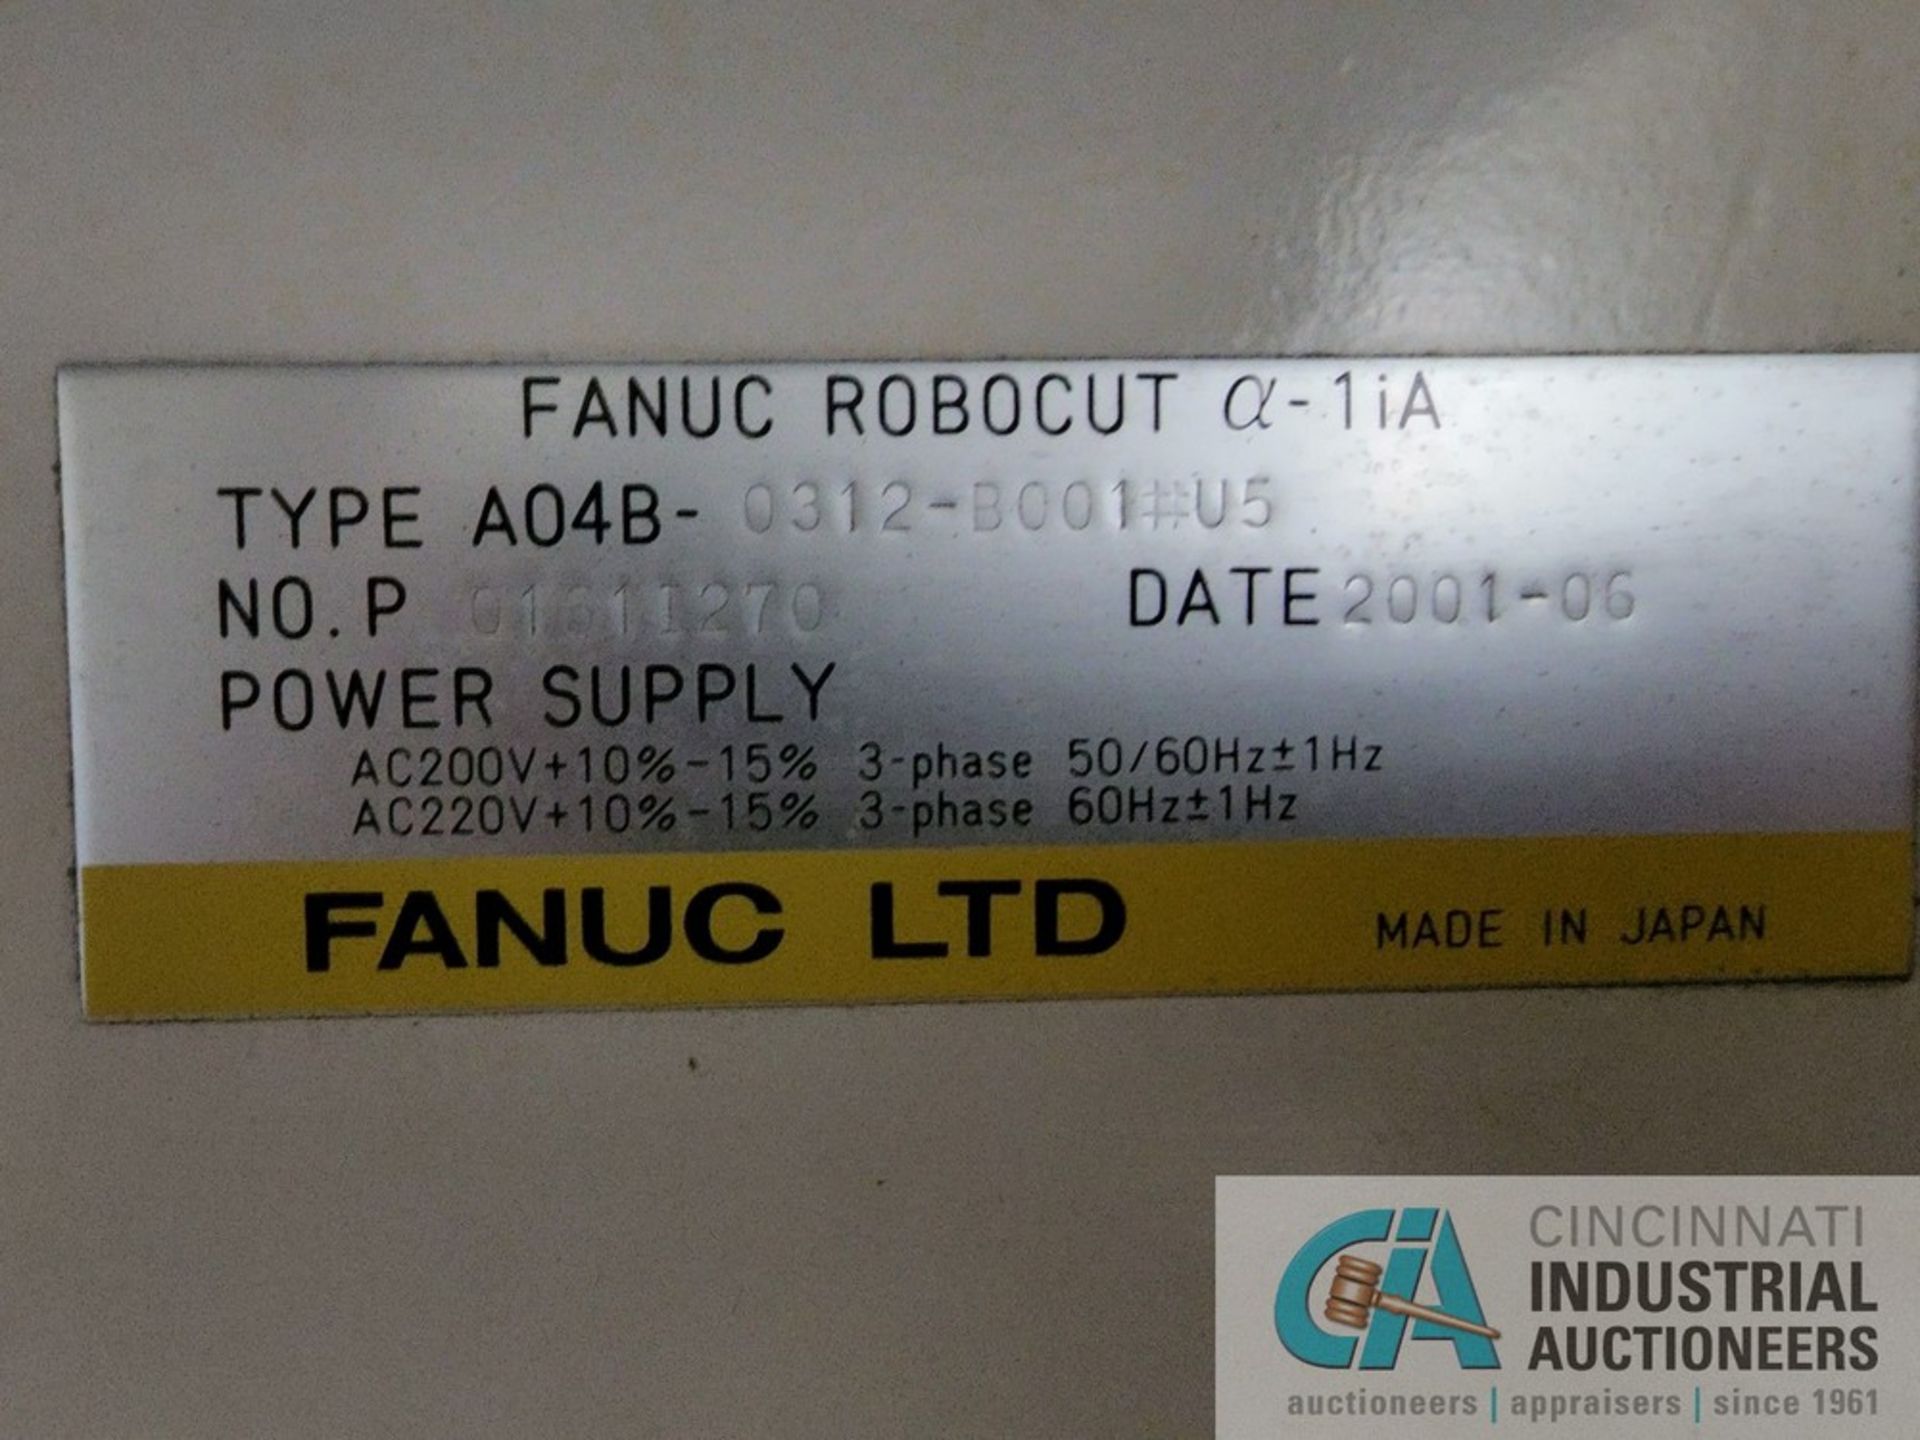 FANUC CNC ROBOCUT A-1iC WIRE EDM; S/N 01611270, TYPE A04-0312-B001-U5, FANUC SERIES 18i-W - Image 9 of 12